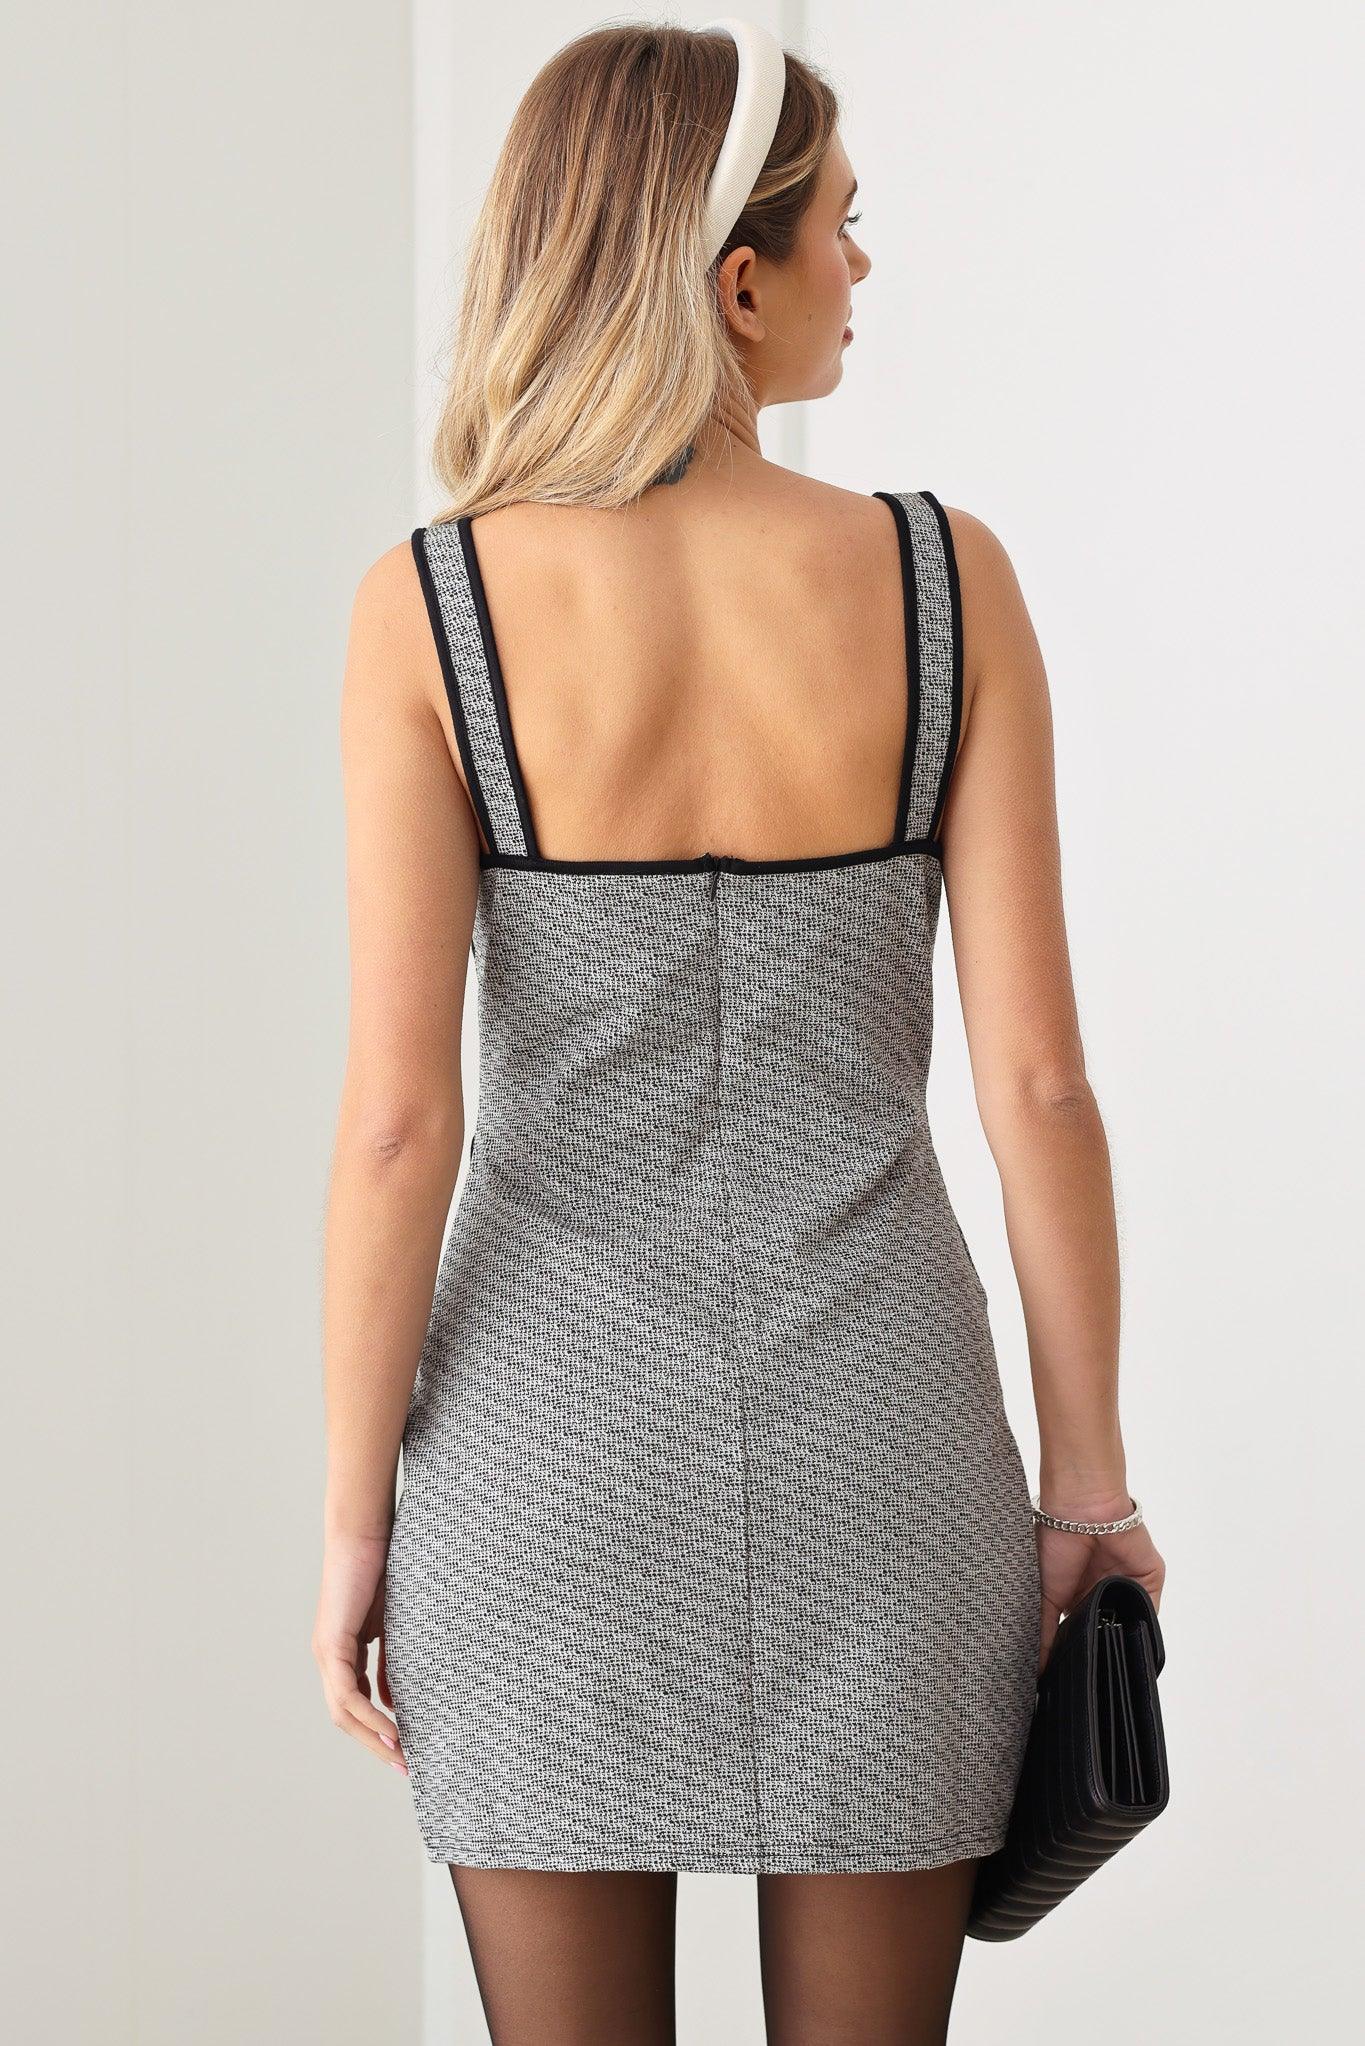 Sparkle Tweed Binding Detail Square Neckline Sleeveless Mini Dress - Tasha Apparel Wholesale